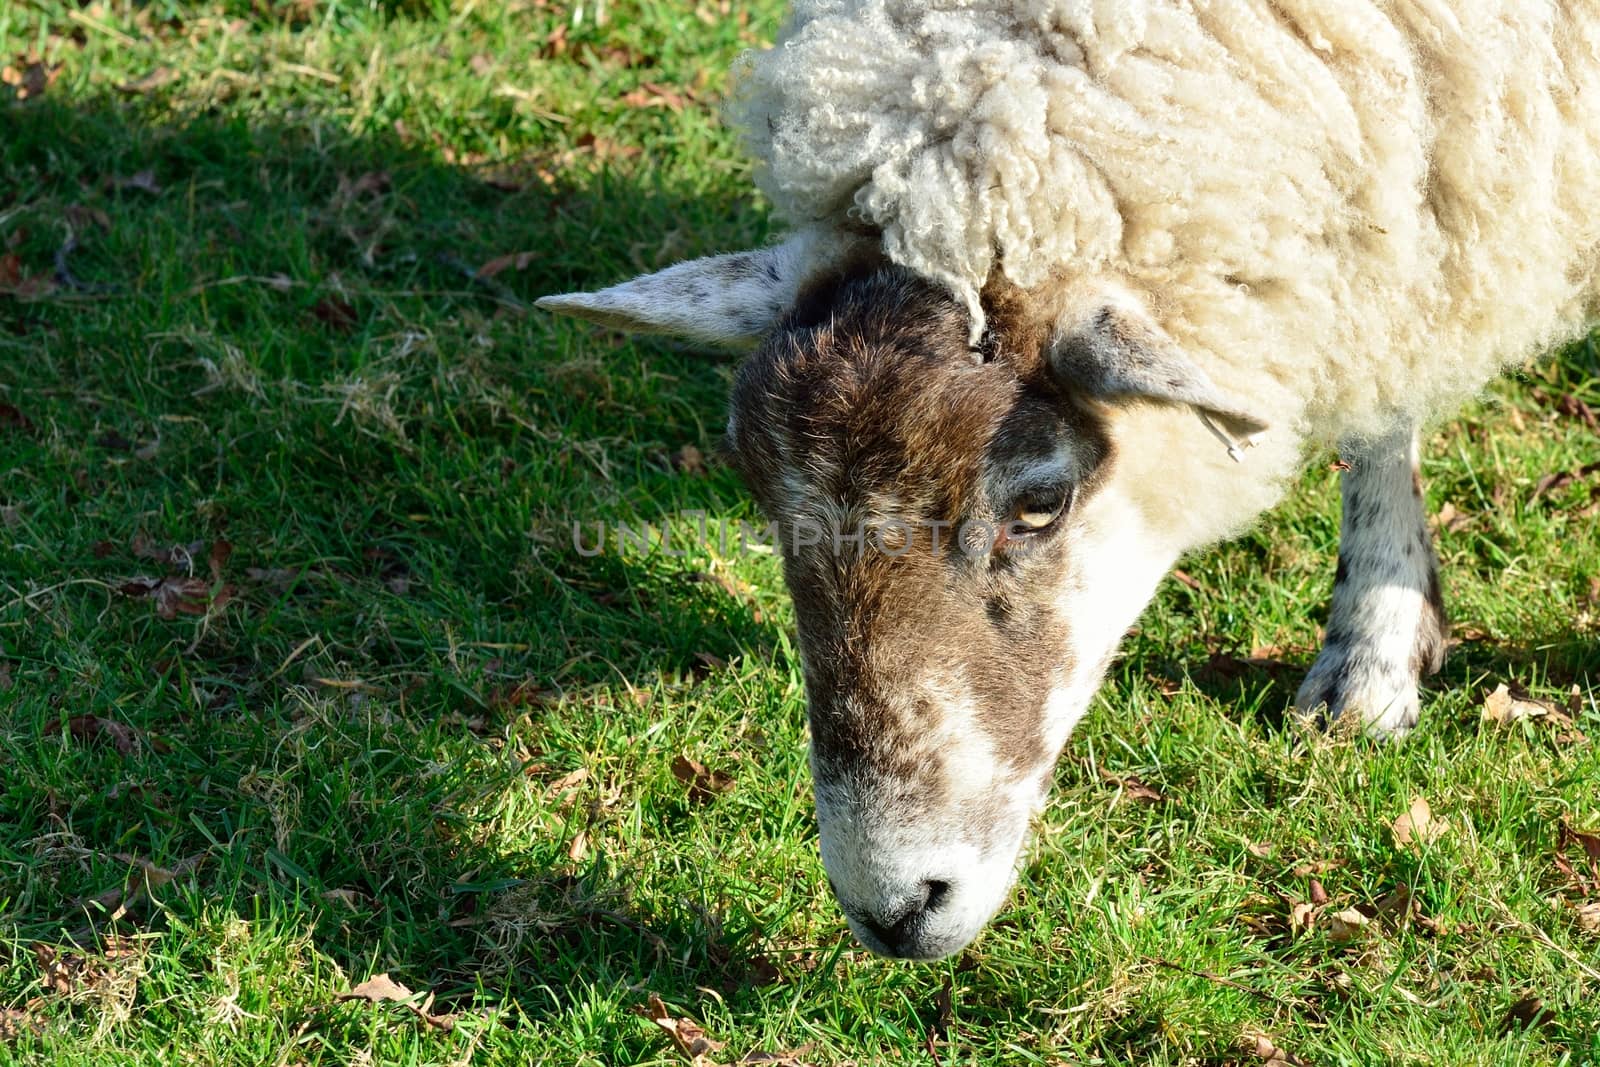 Sheep feeding on grass by pauws99